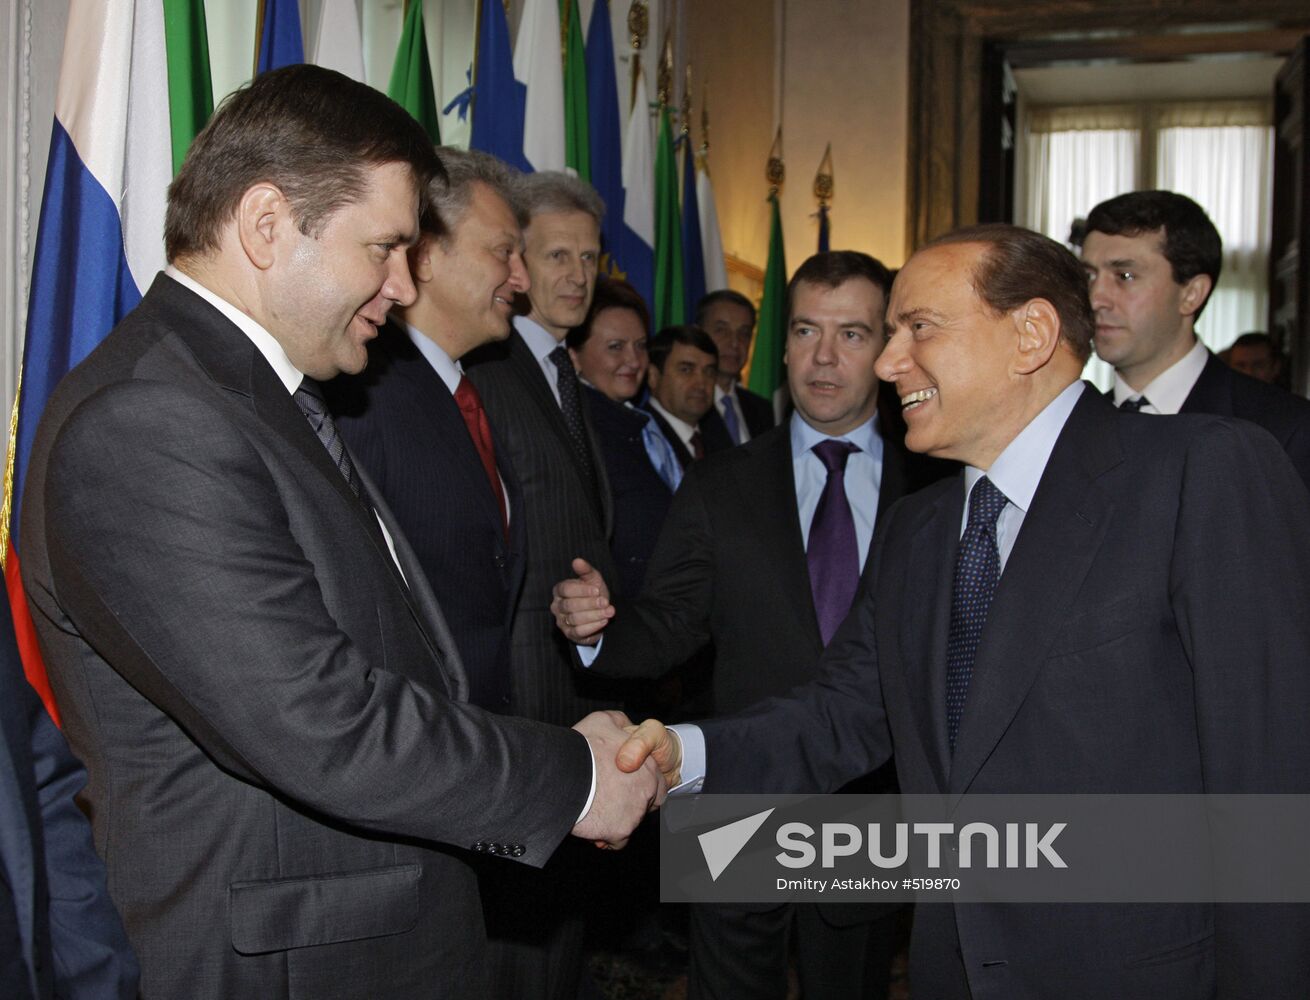 Russian-Italian intergovernmental consultations